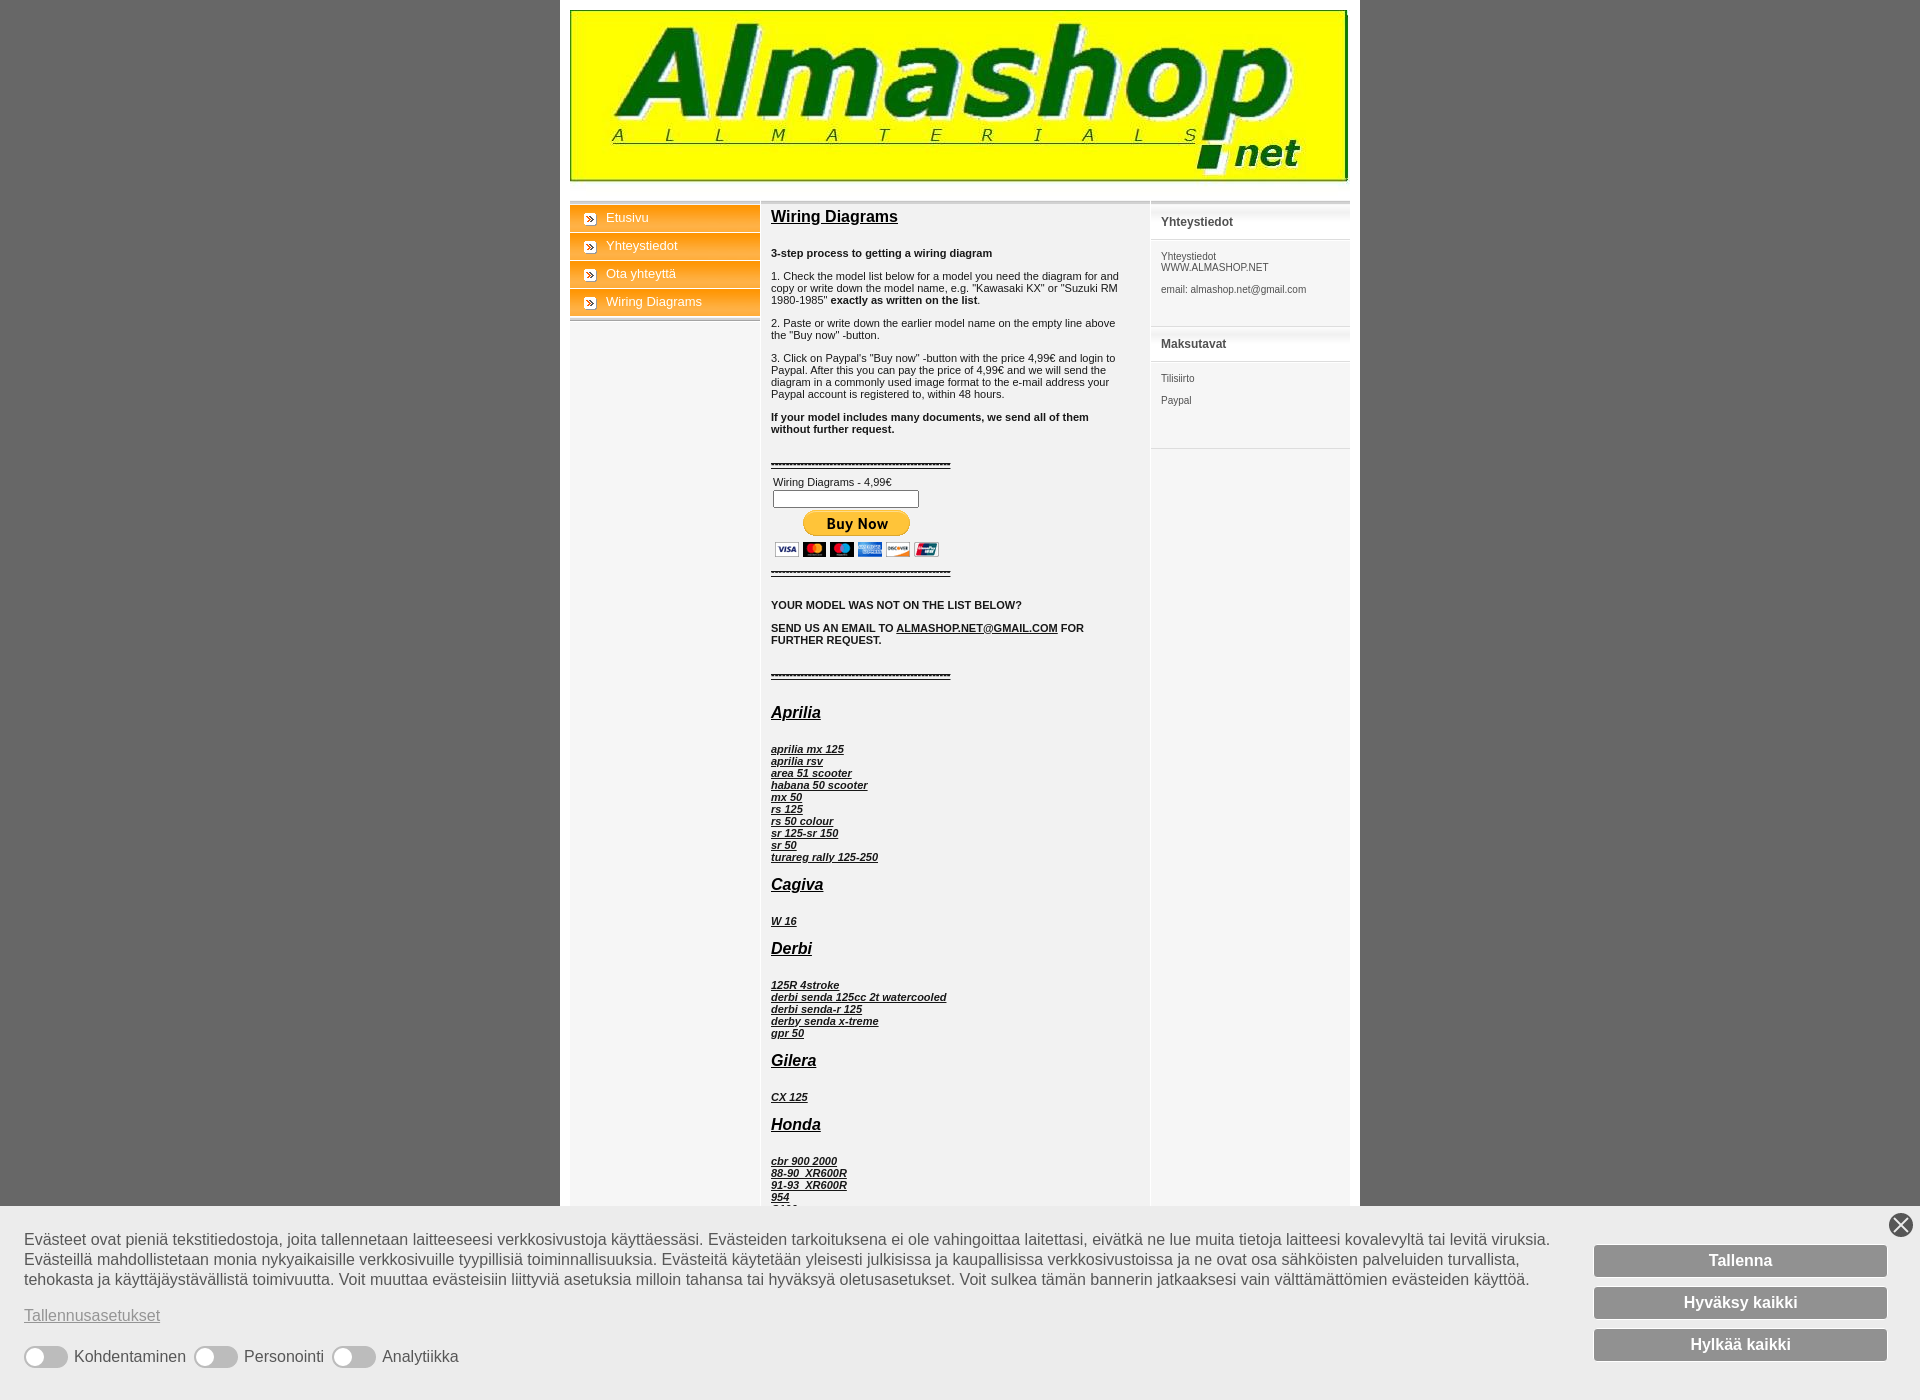 Näyttökuva almashop.net